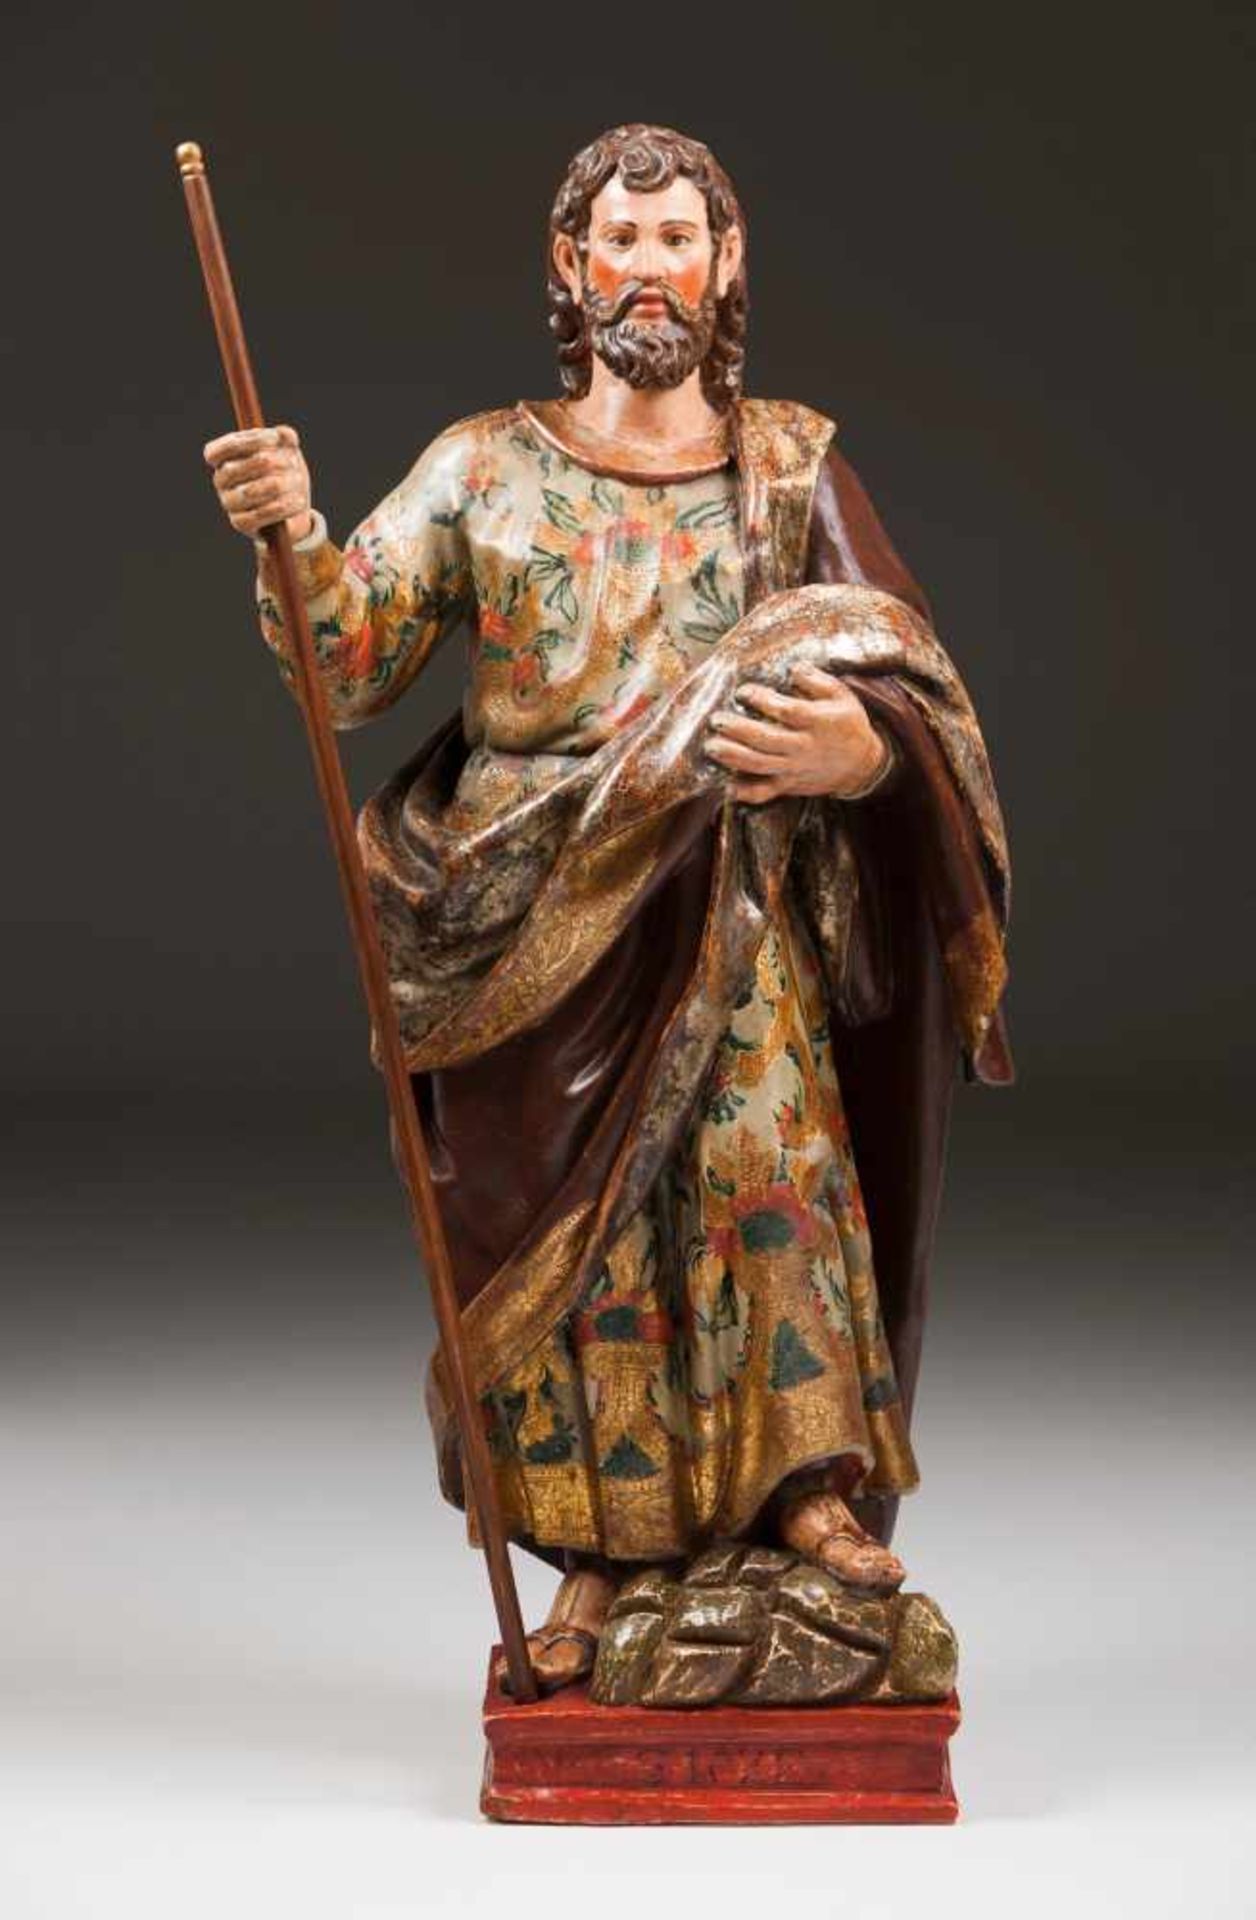 Saint JosephCarved, gilt and polychrome woooden sculptureDepicting Saint Joseph wearing a green